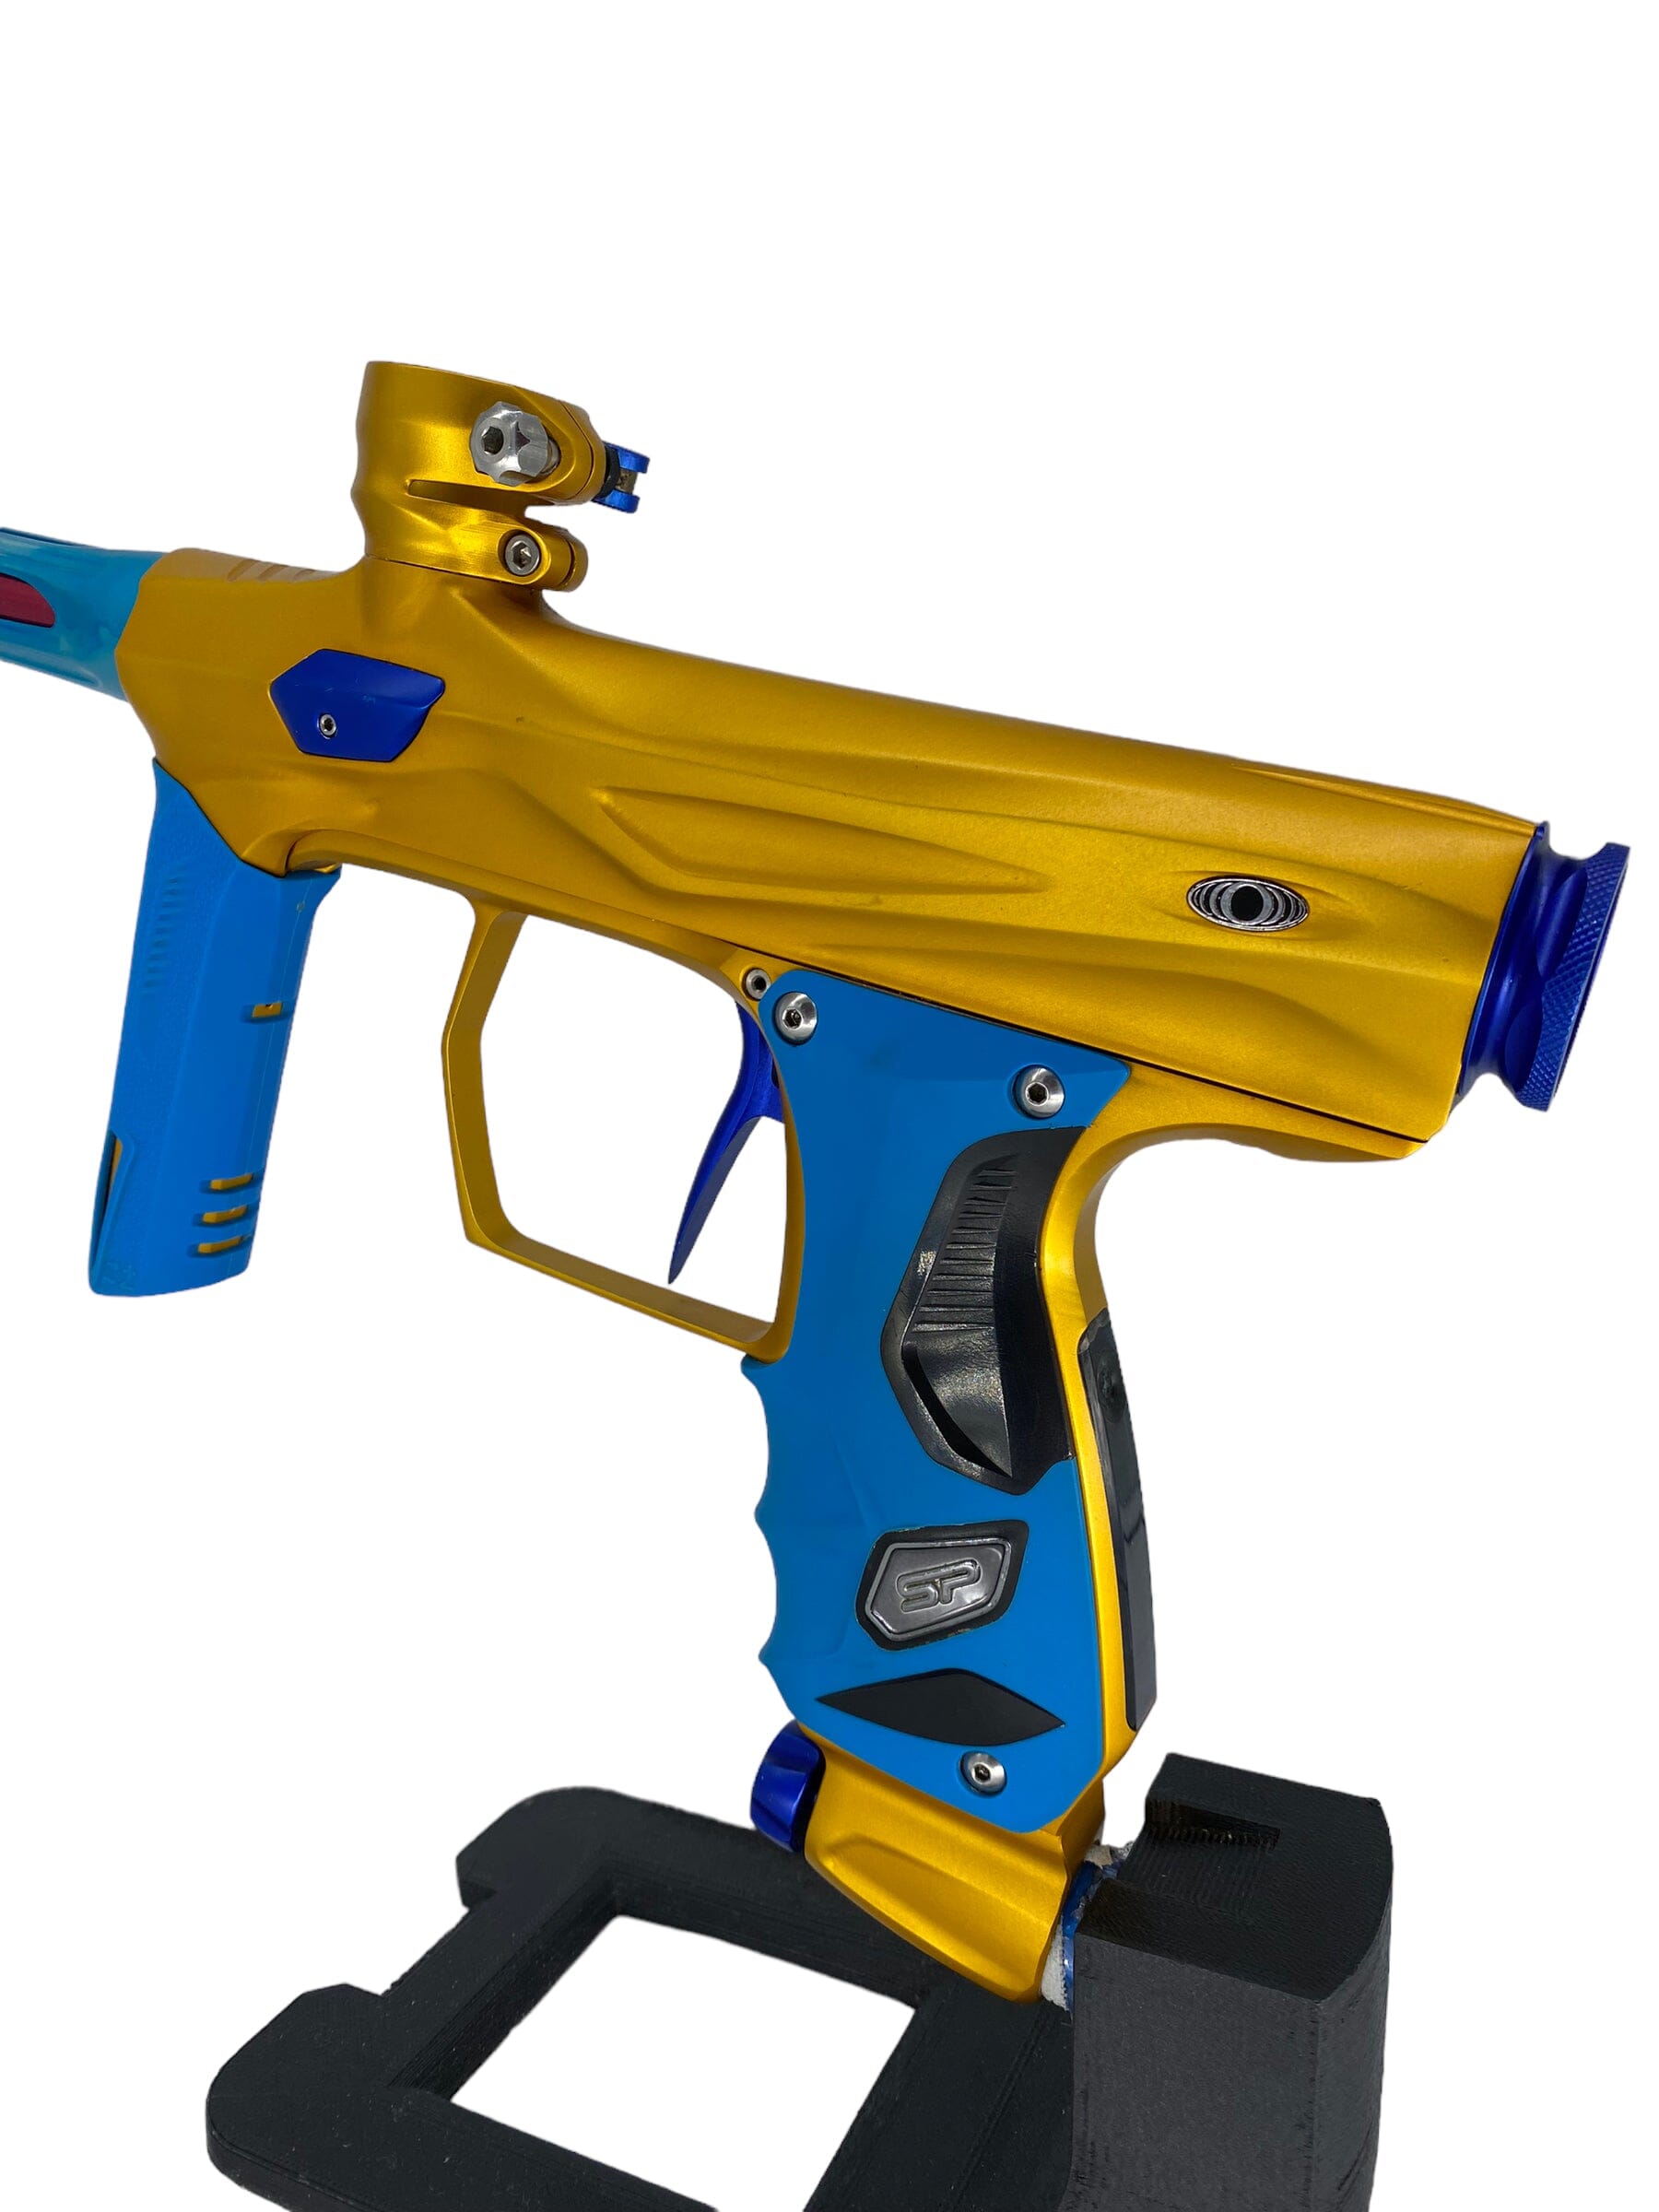 Used Sp Shocker Amp Paintball Gun with Mech Kit Paintball Gun from CPXBrosPaintball Buy/Sell/Trade Paintball Markers, Paintball Hoppers, Paintball Masks, and Hormesis Headbands